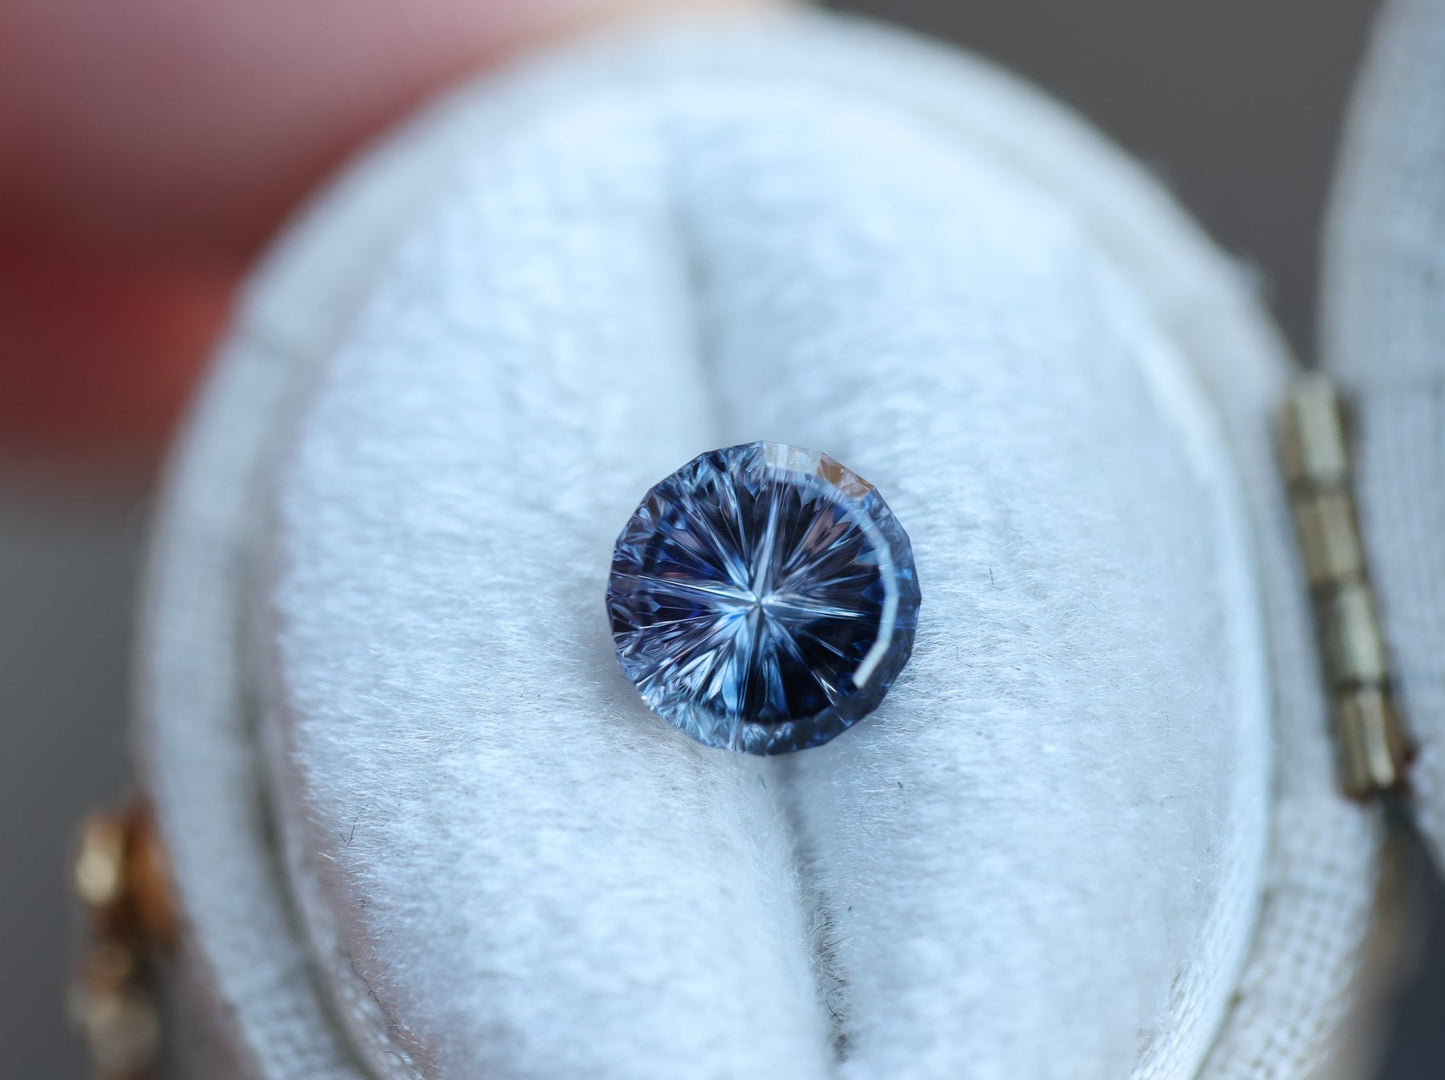 1.8ct Parti purple/pink blue sapphire- Starbrite cut by John Dyer